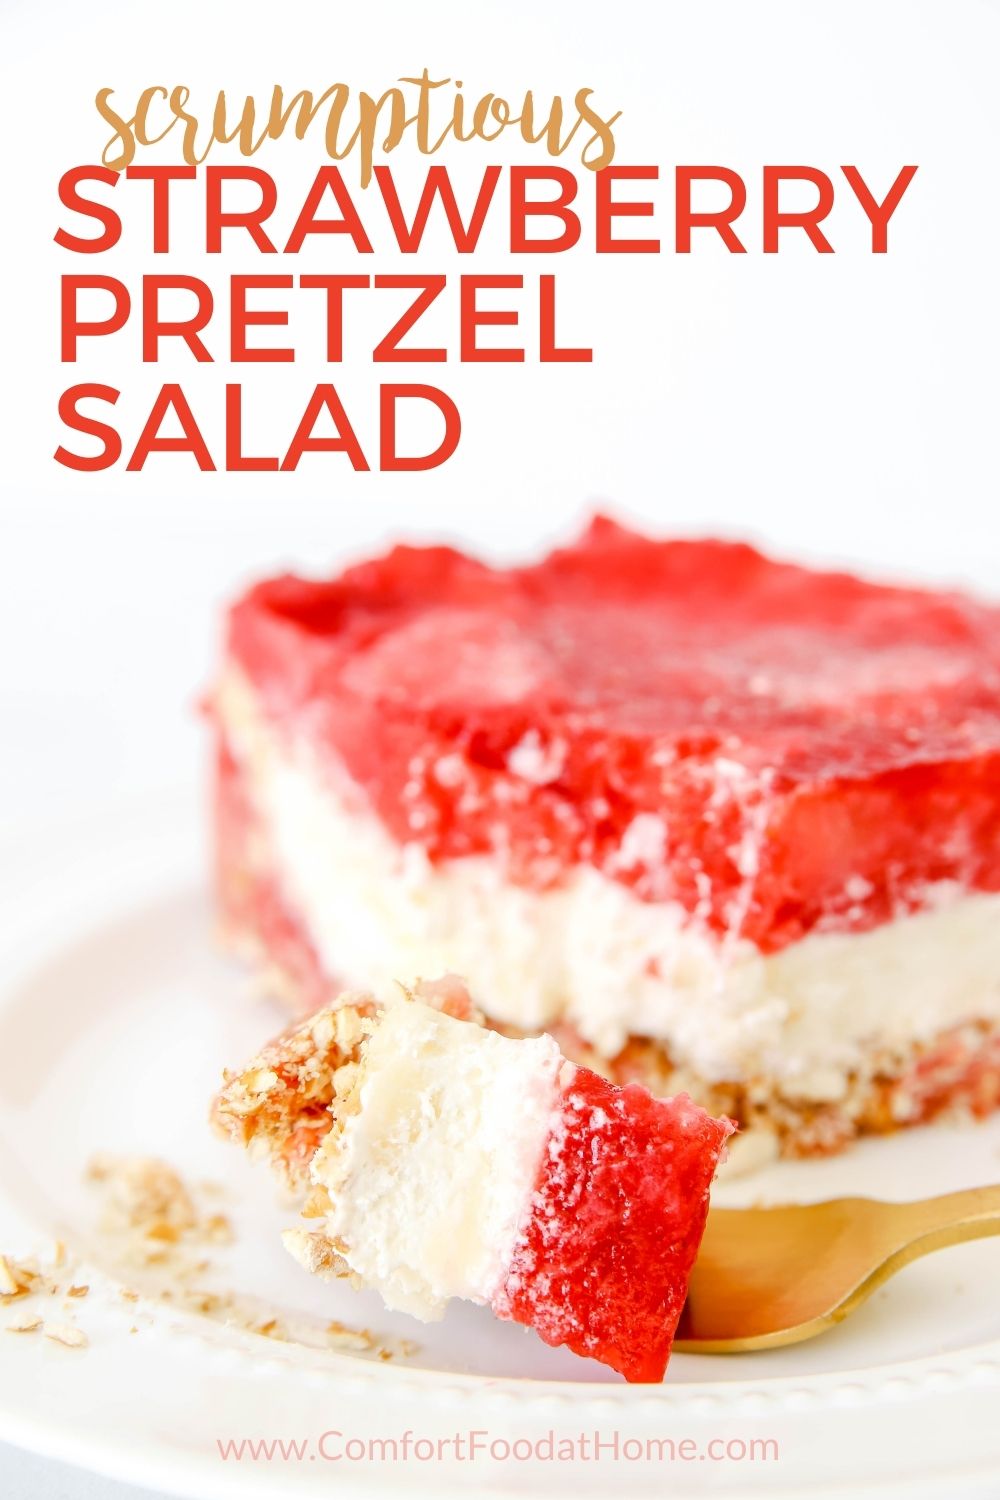 Grandma's Strawberry Pretzel Salad Recipe